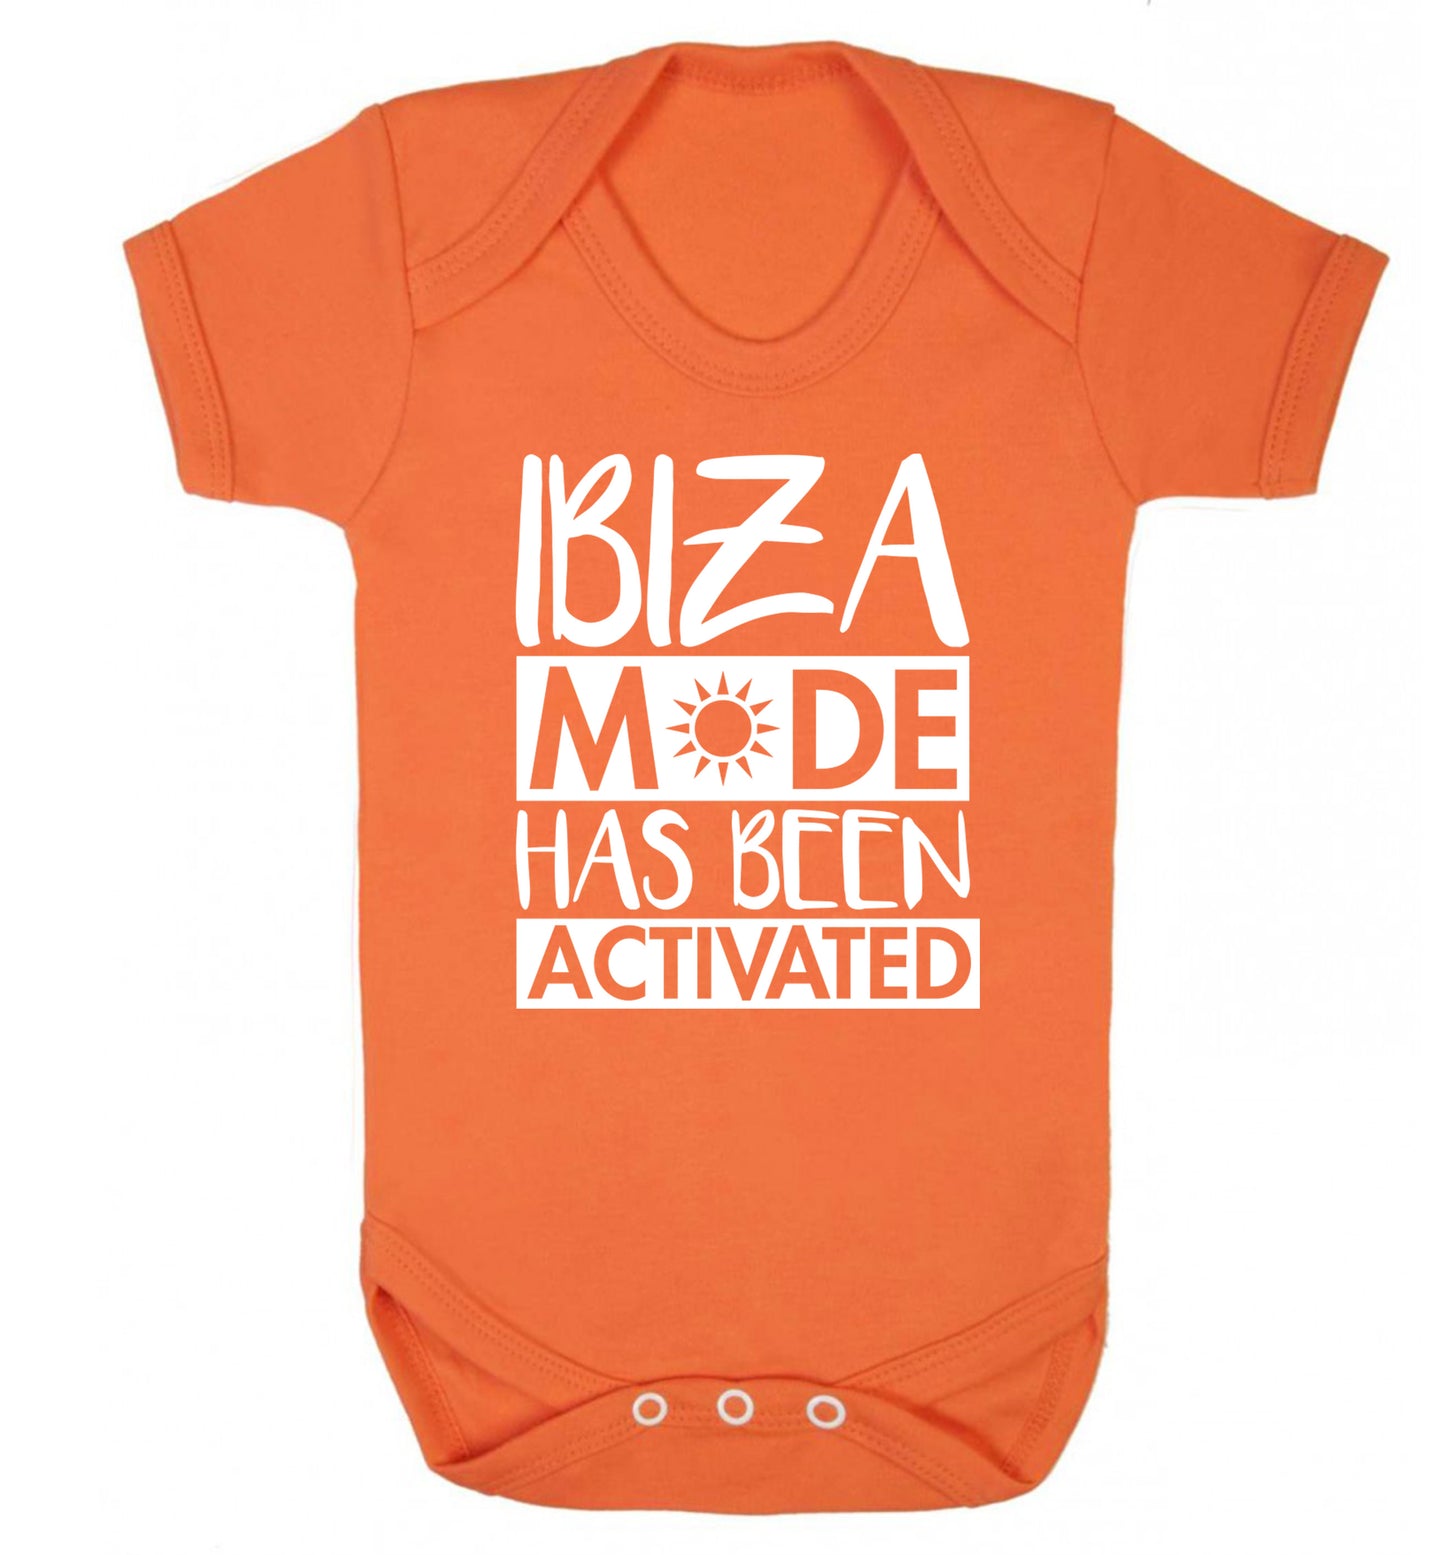 Ibiza mode has been activated Baby Vest orange 18-24 months